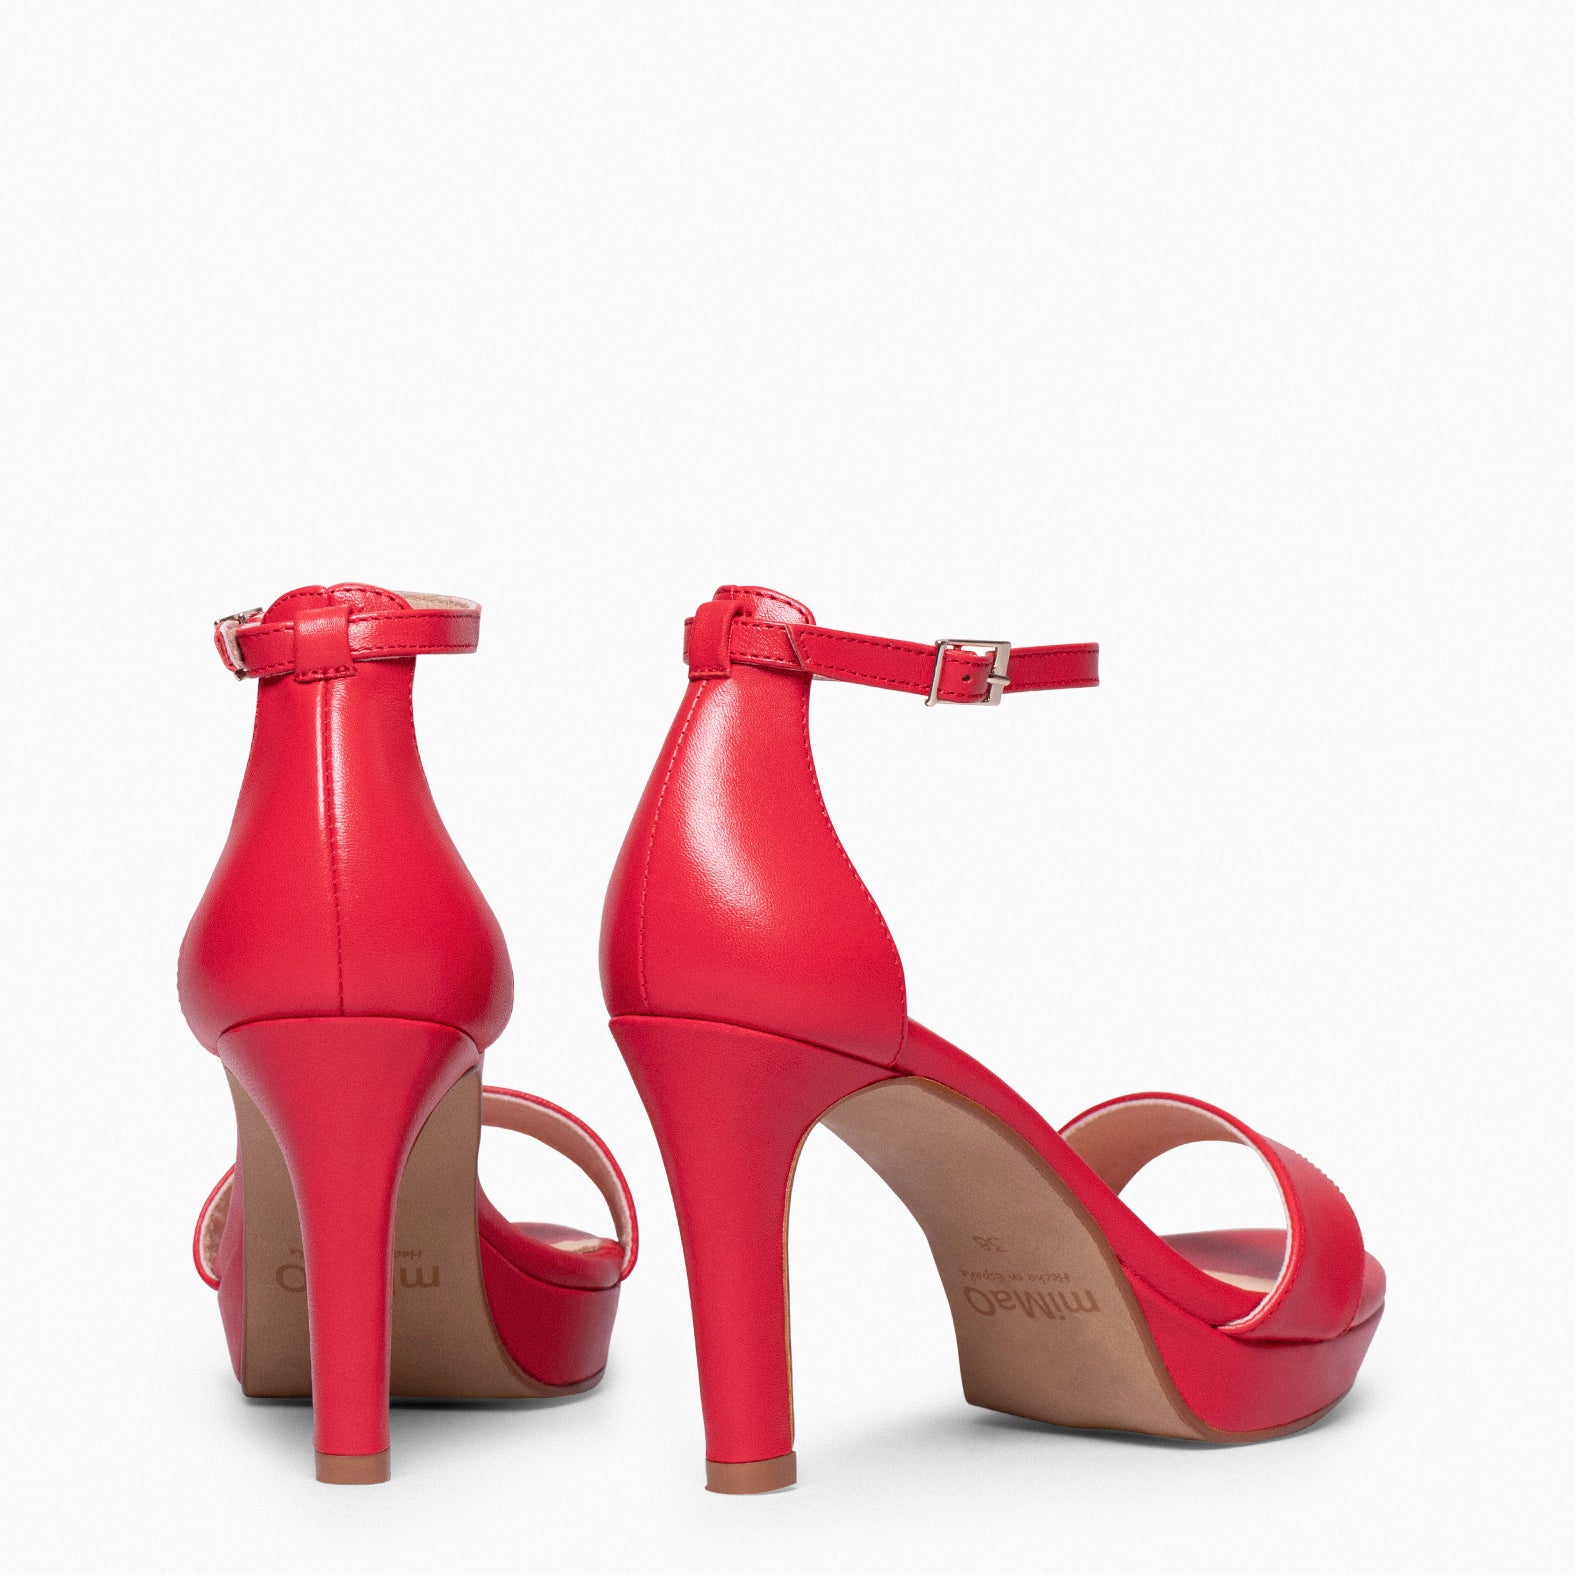 PARTY – RED high-heeled platform sandals